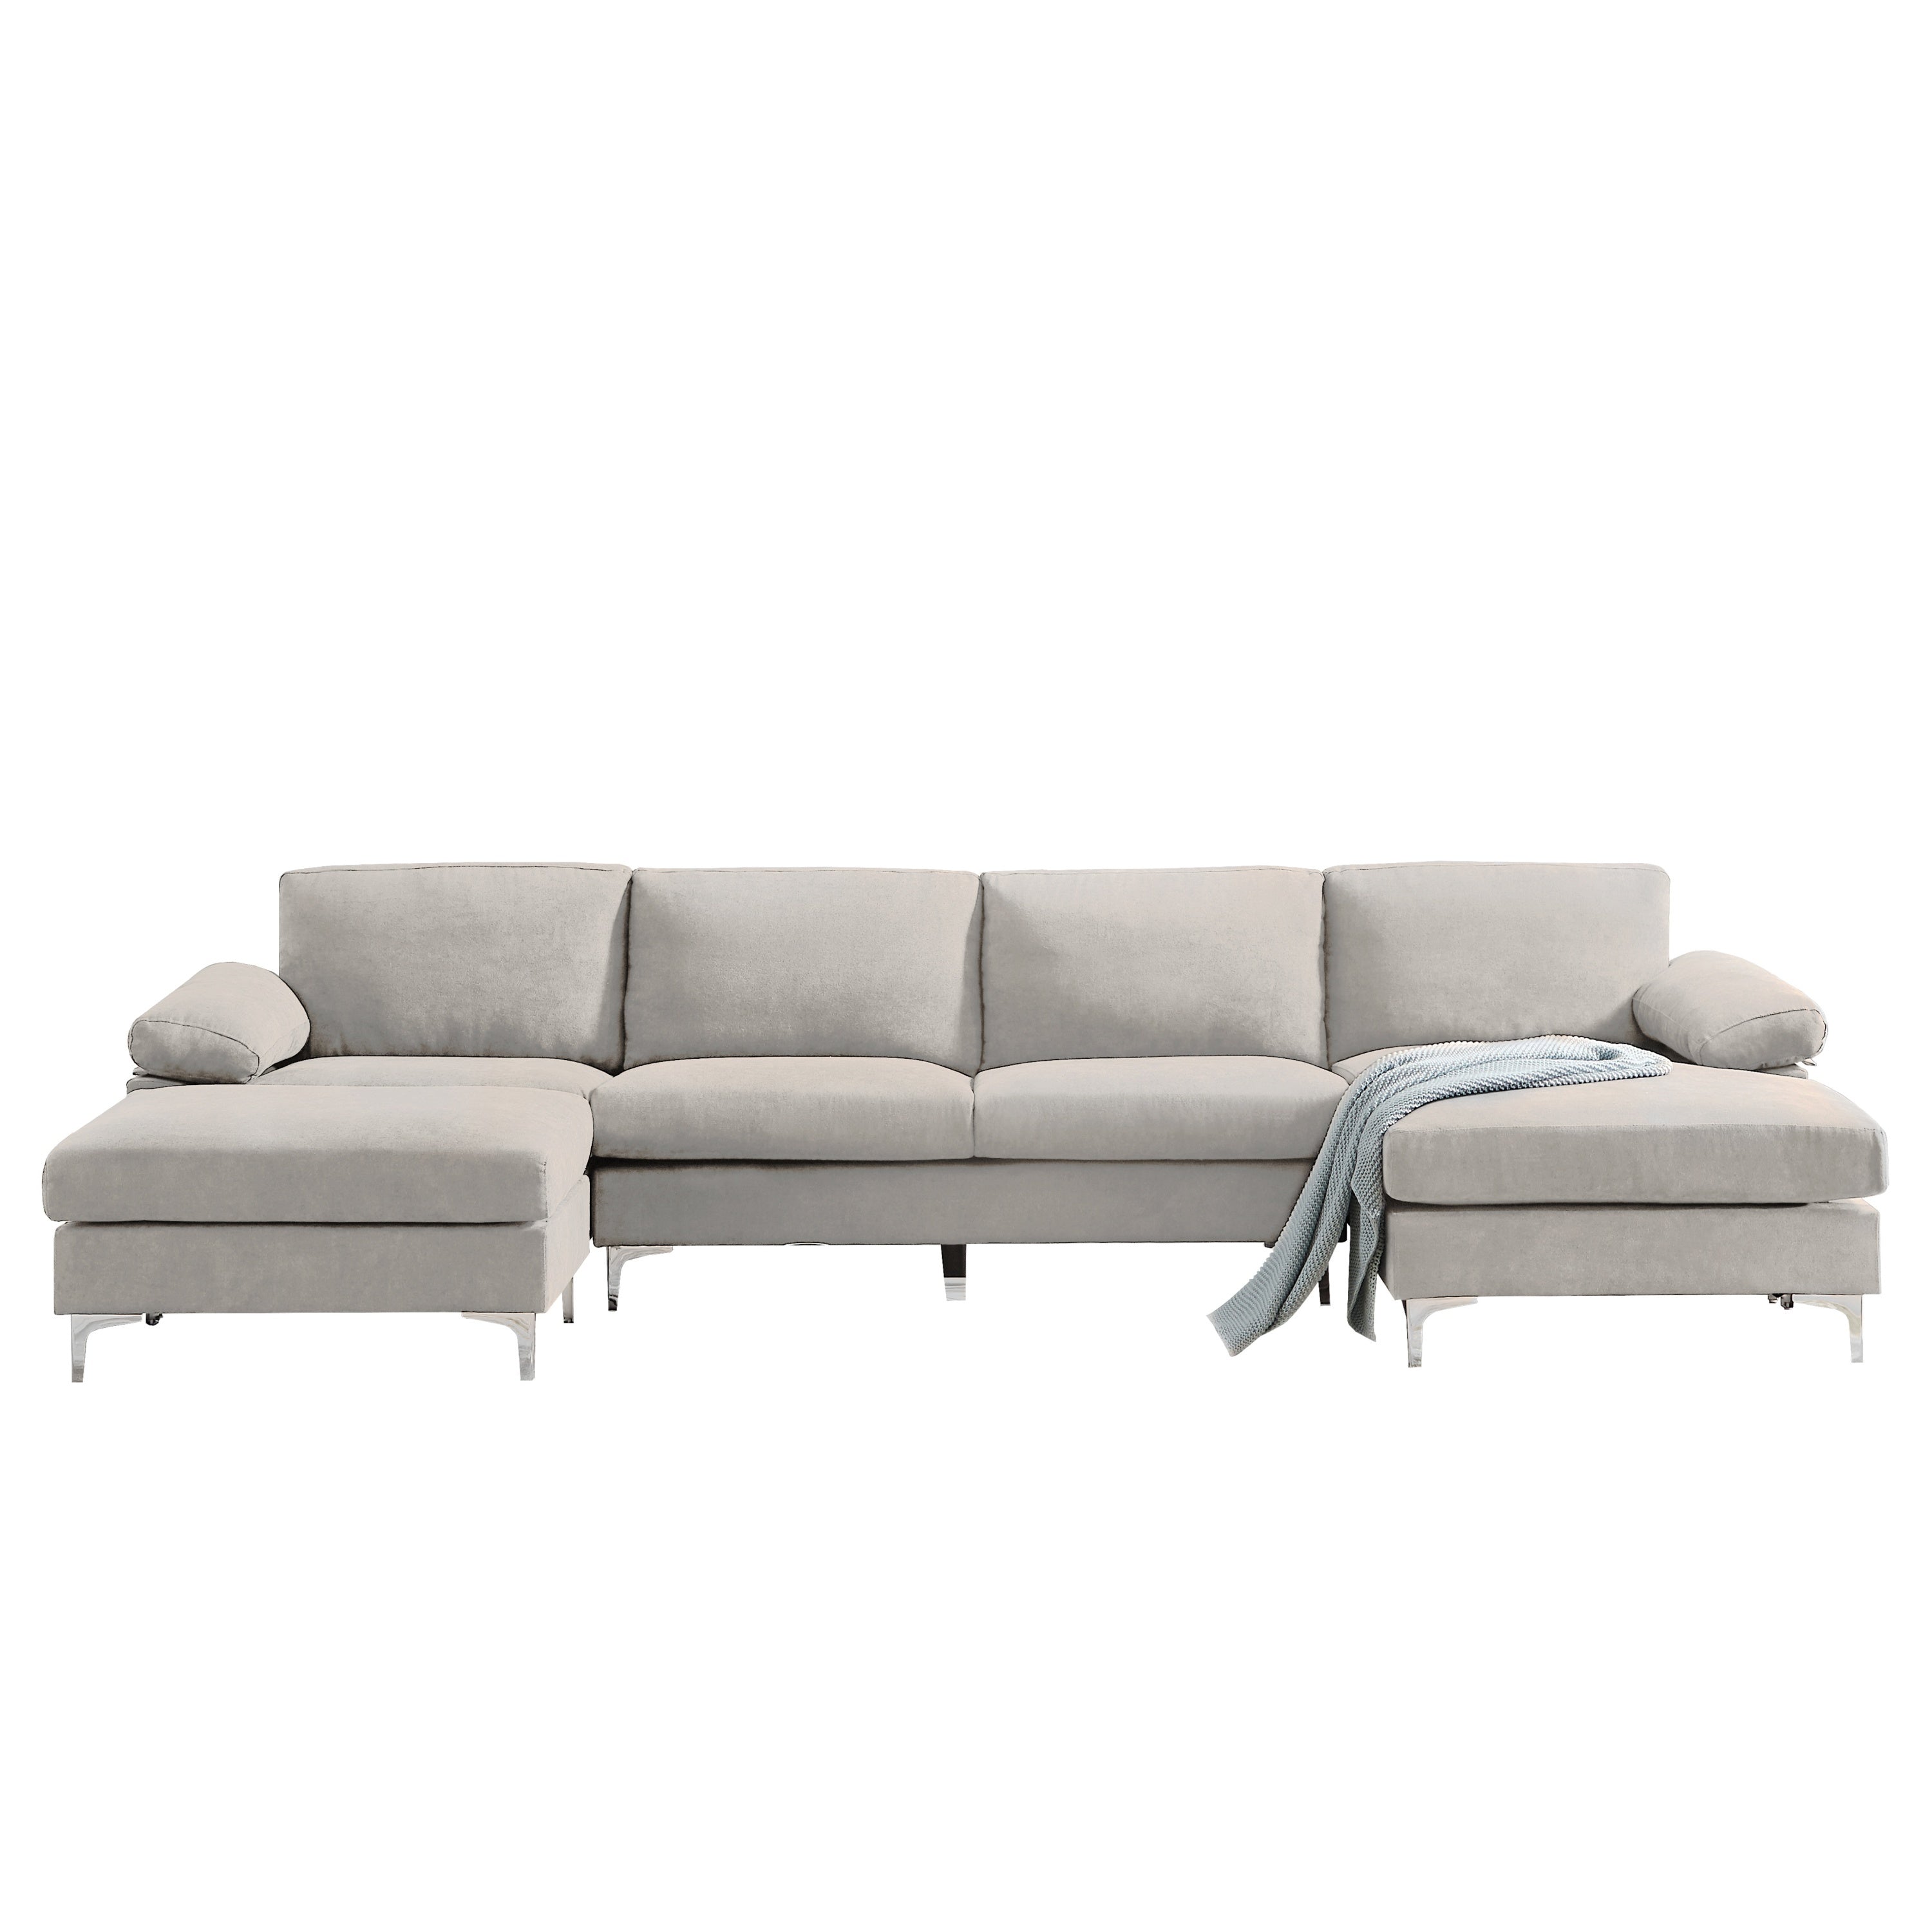 RELAX LOUNGE Convertible Modular Sofa (Gray)